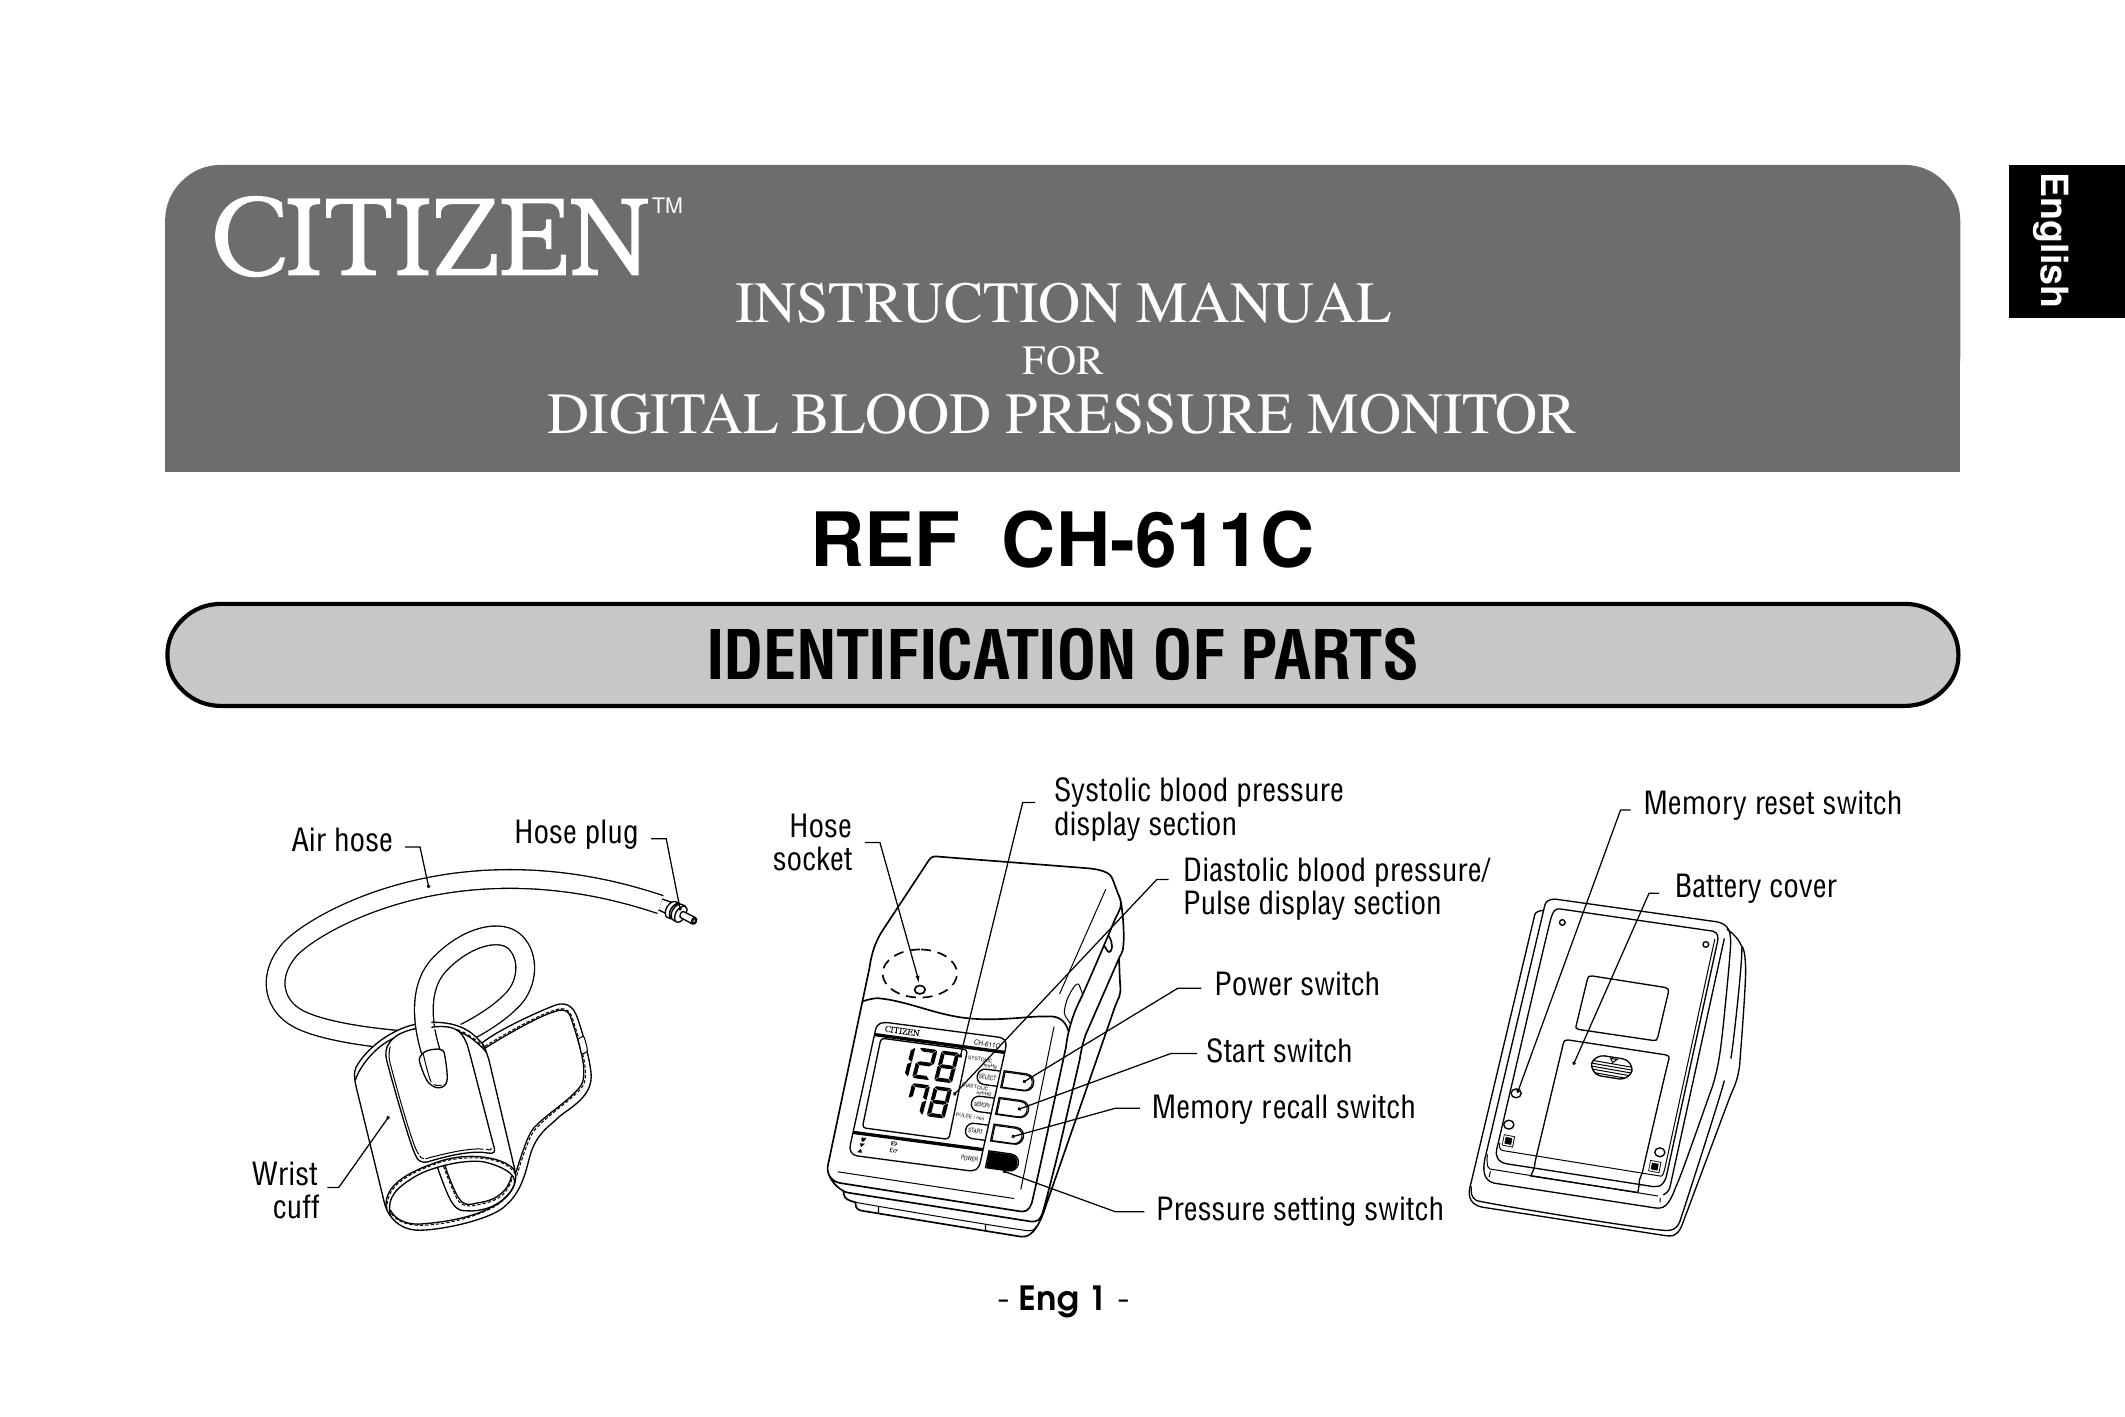 Citizen REF CH-611C Blood Glucose Meter User Manual